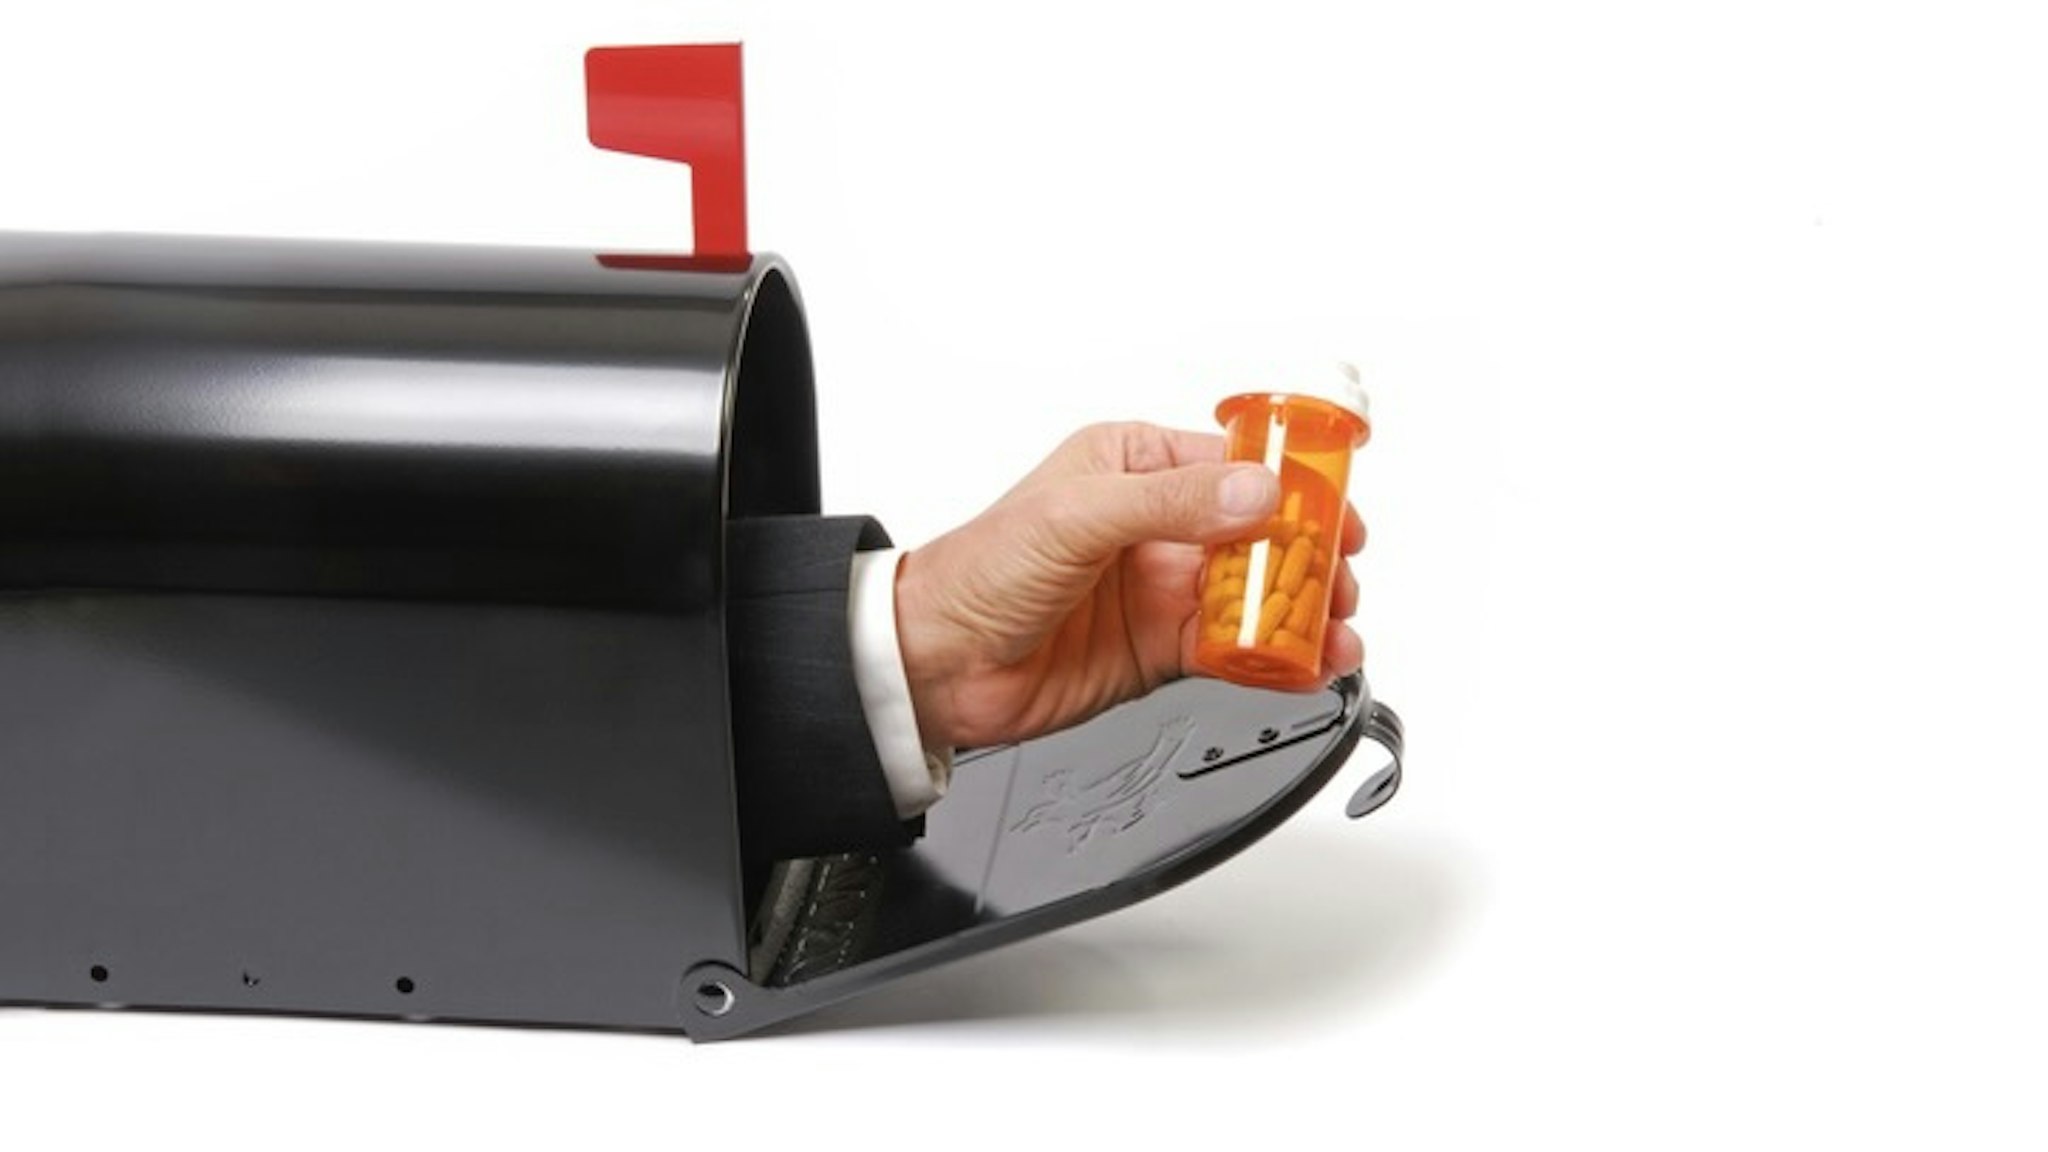 Mailbox Prescription - stock photo Mailbox with business man holding prescription bottle.